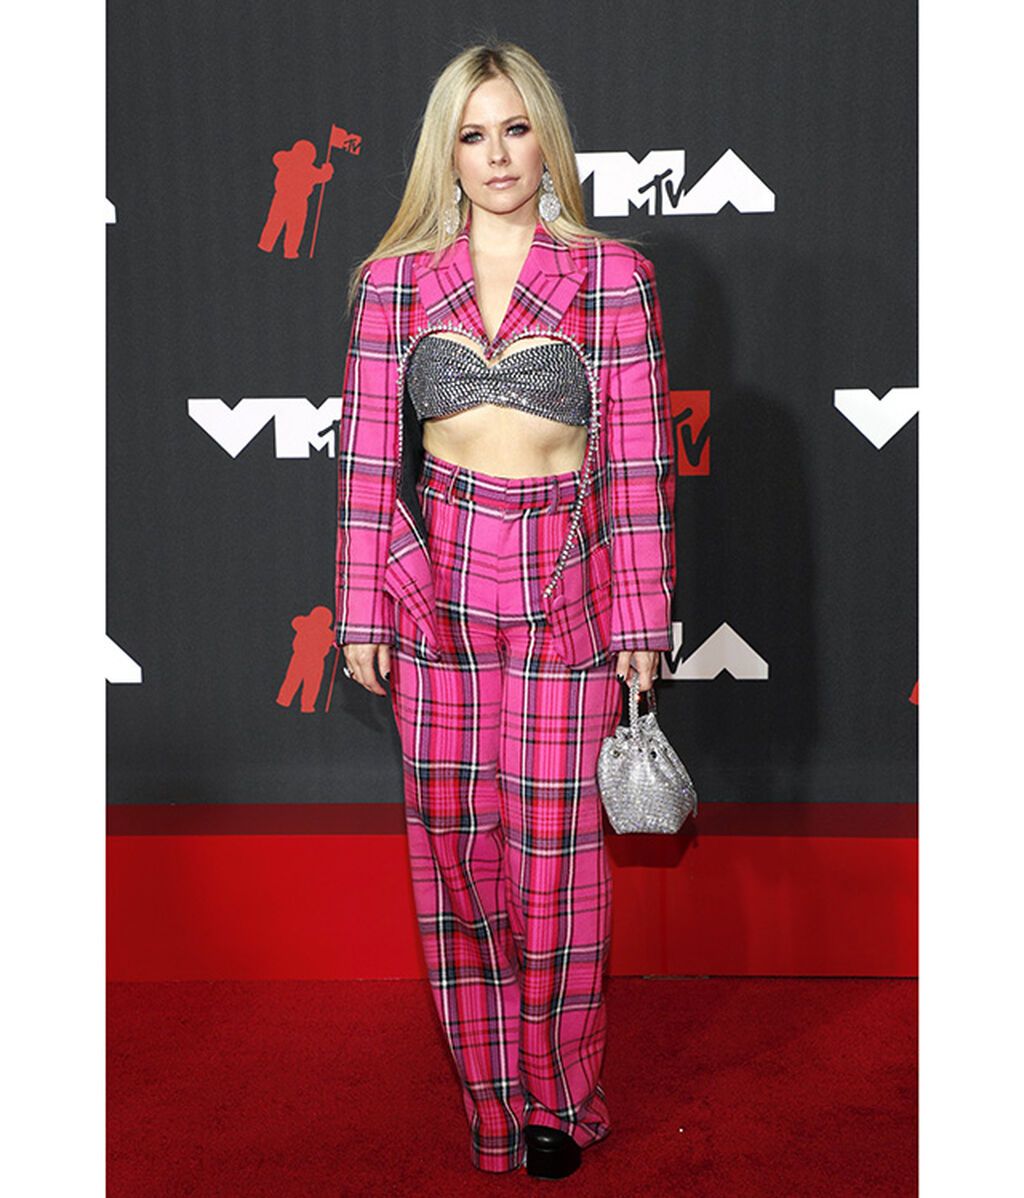 JLo, Madonna, Justin Bieber... La alfombra roja de los MTV VMAs 2021, foto a foto